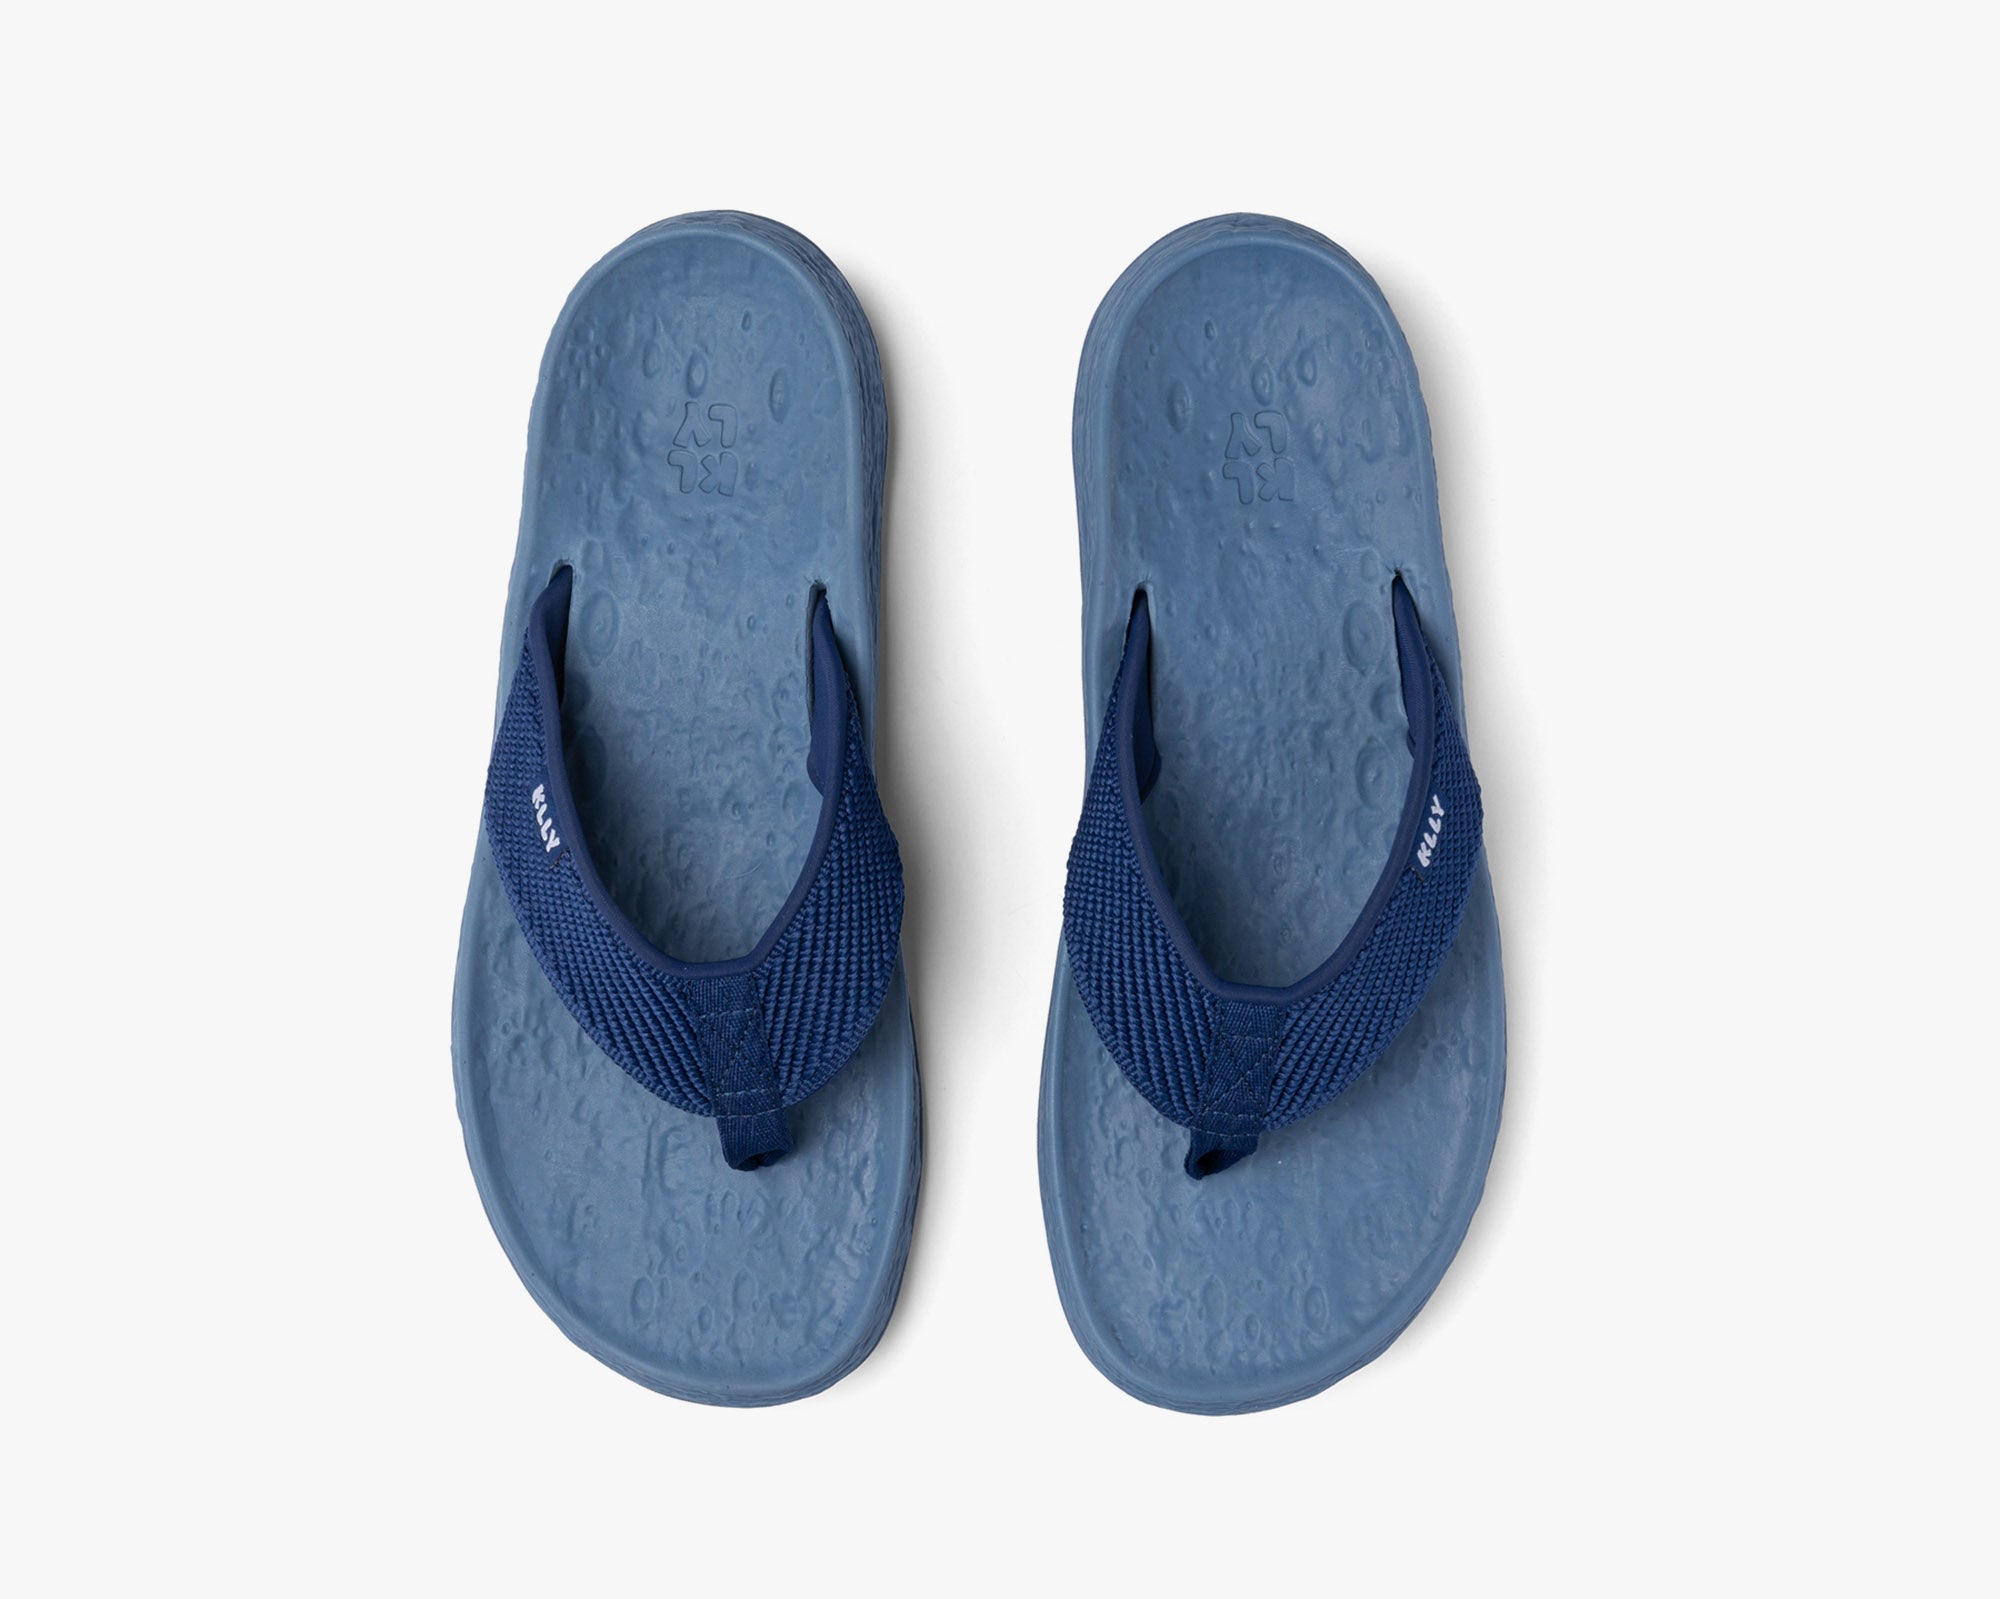 Men’s beach sandals - klly sandals blue moon​